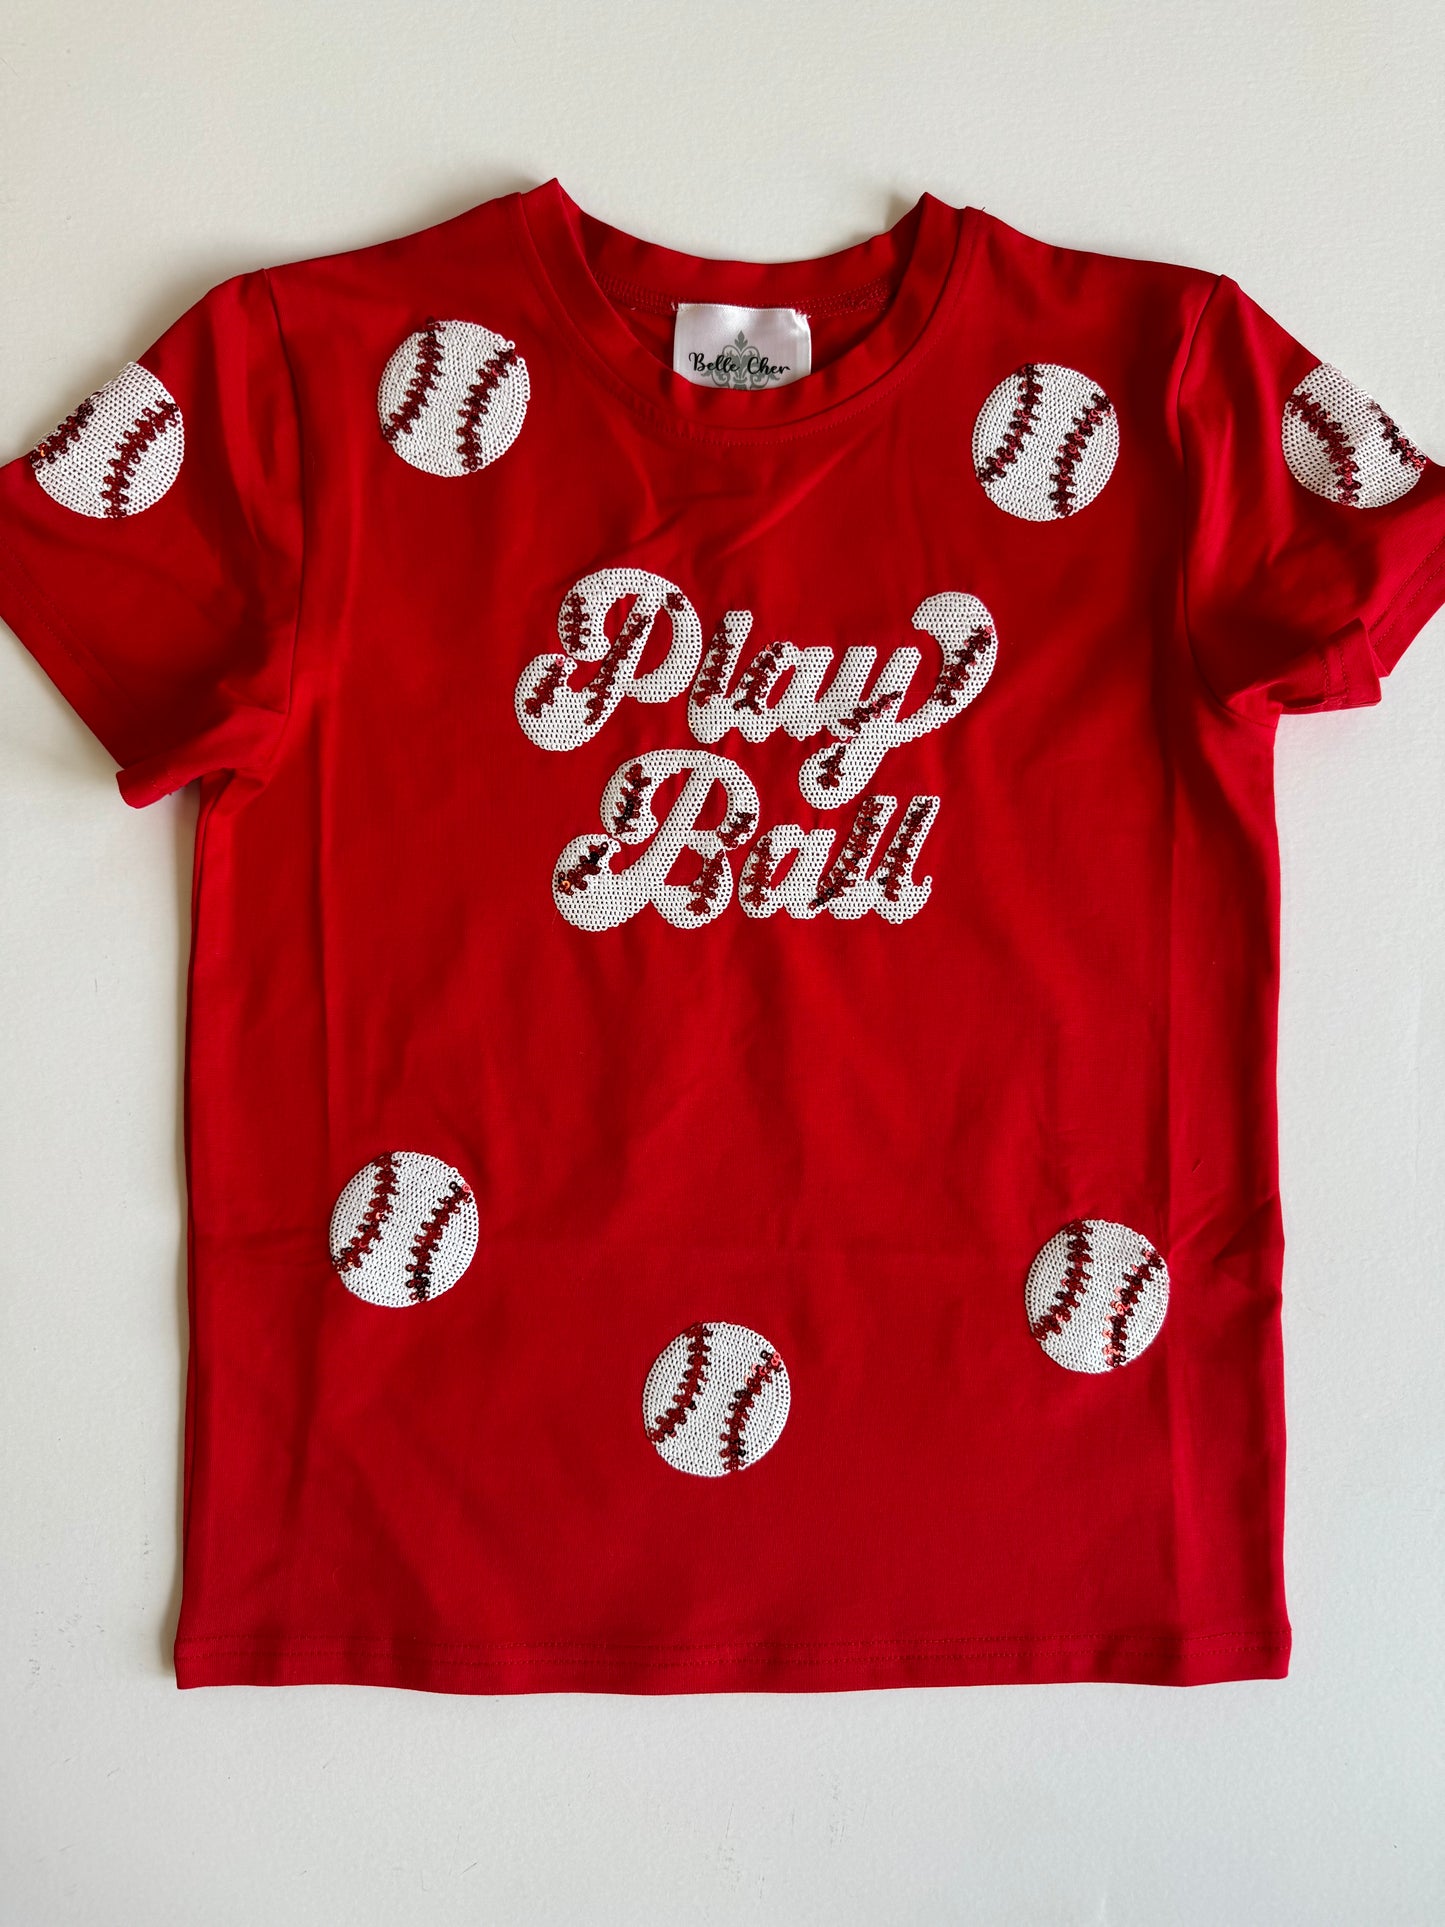 Kids Red Play Ball Shirt